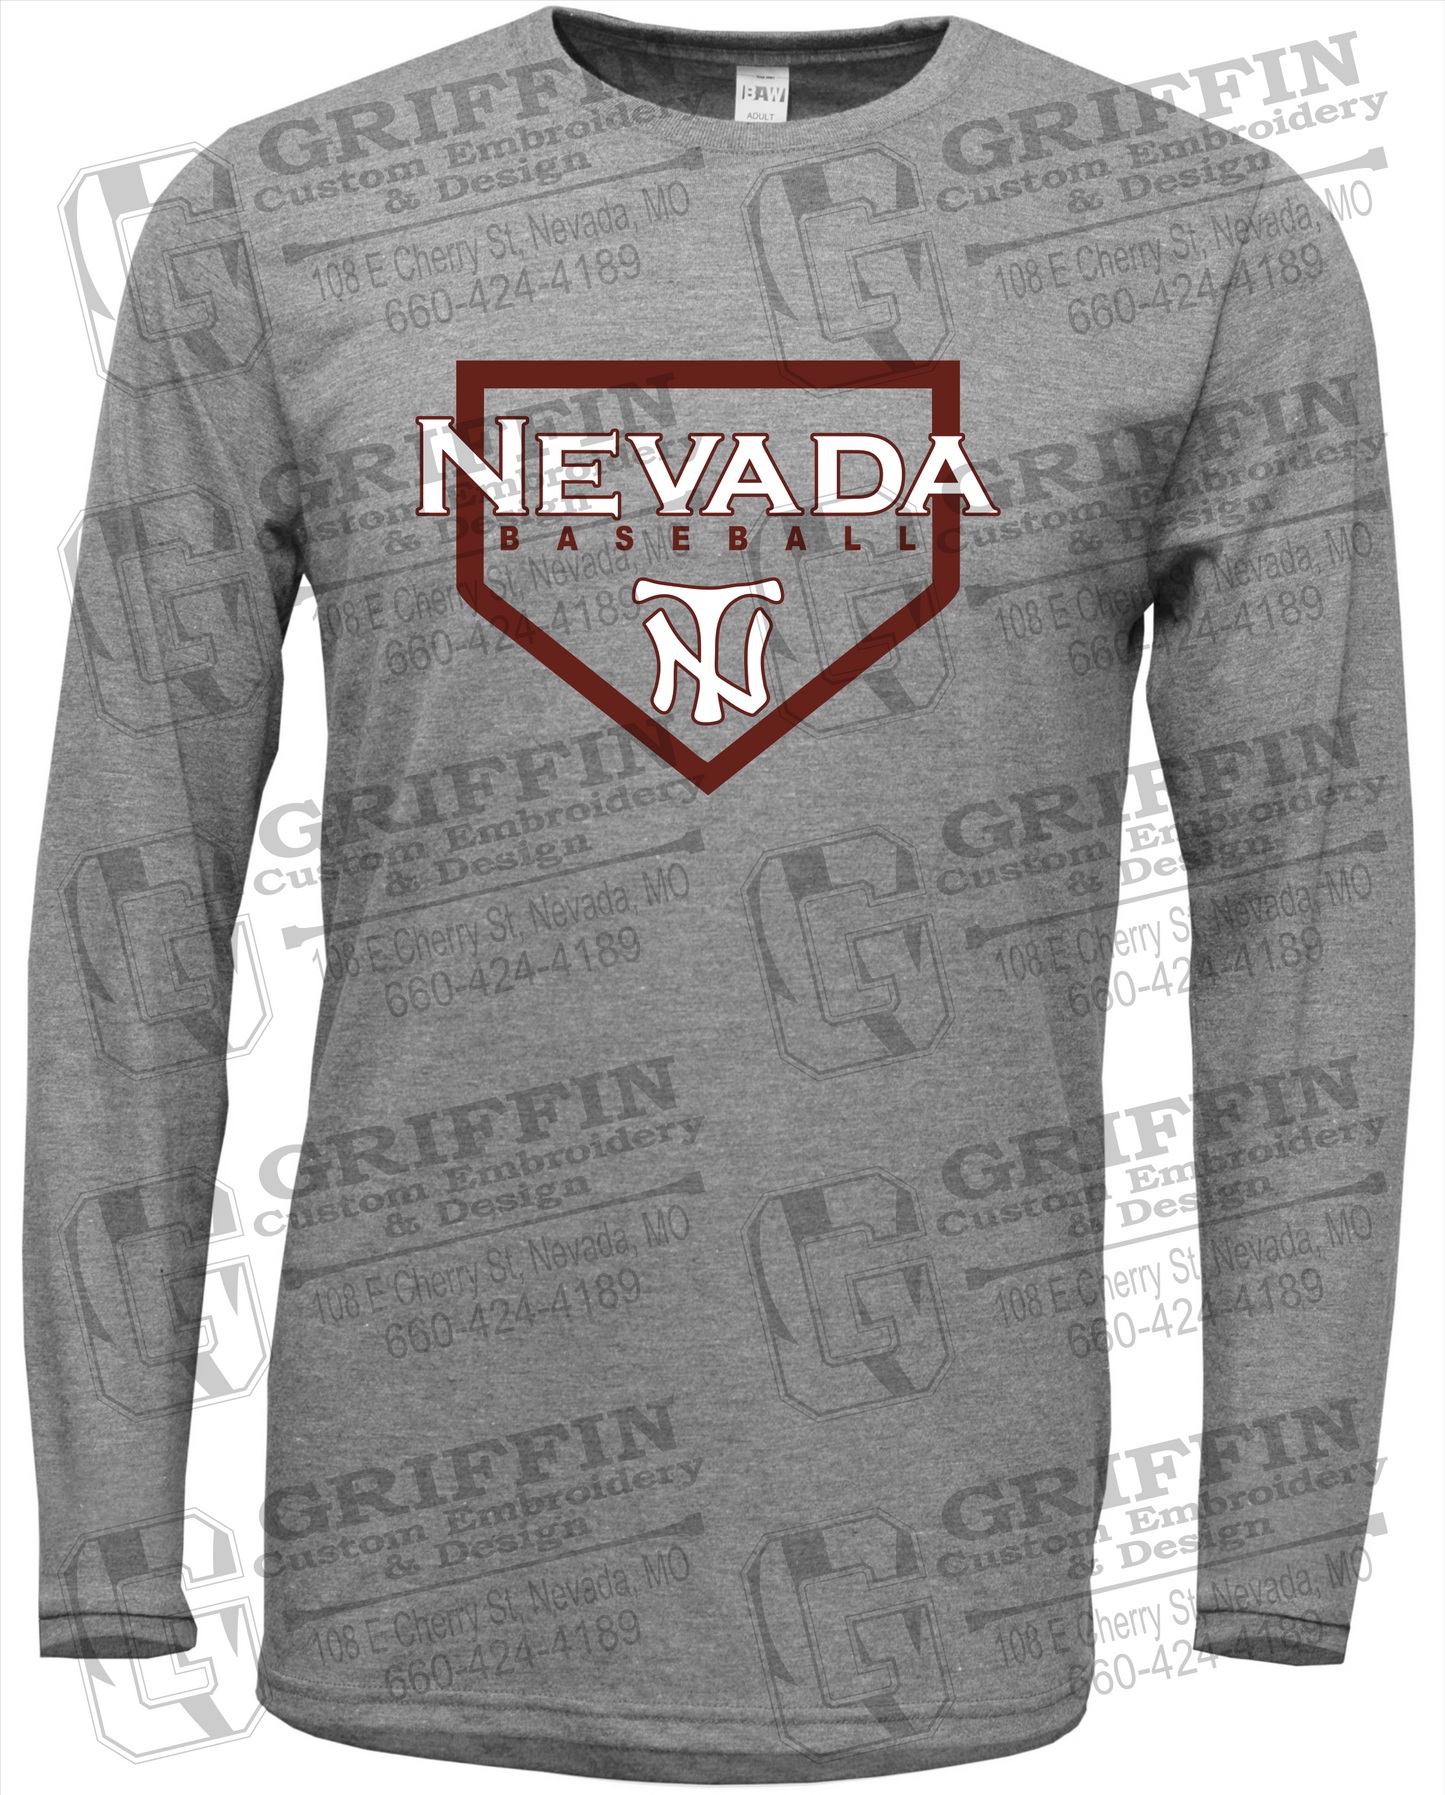 Nevada Tigers 21-S Long Sleeve T-Shirt - Baseball